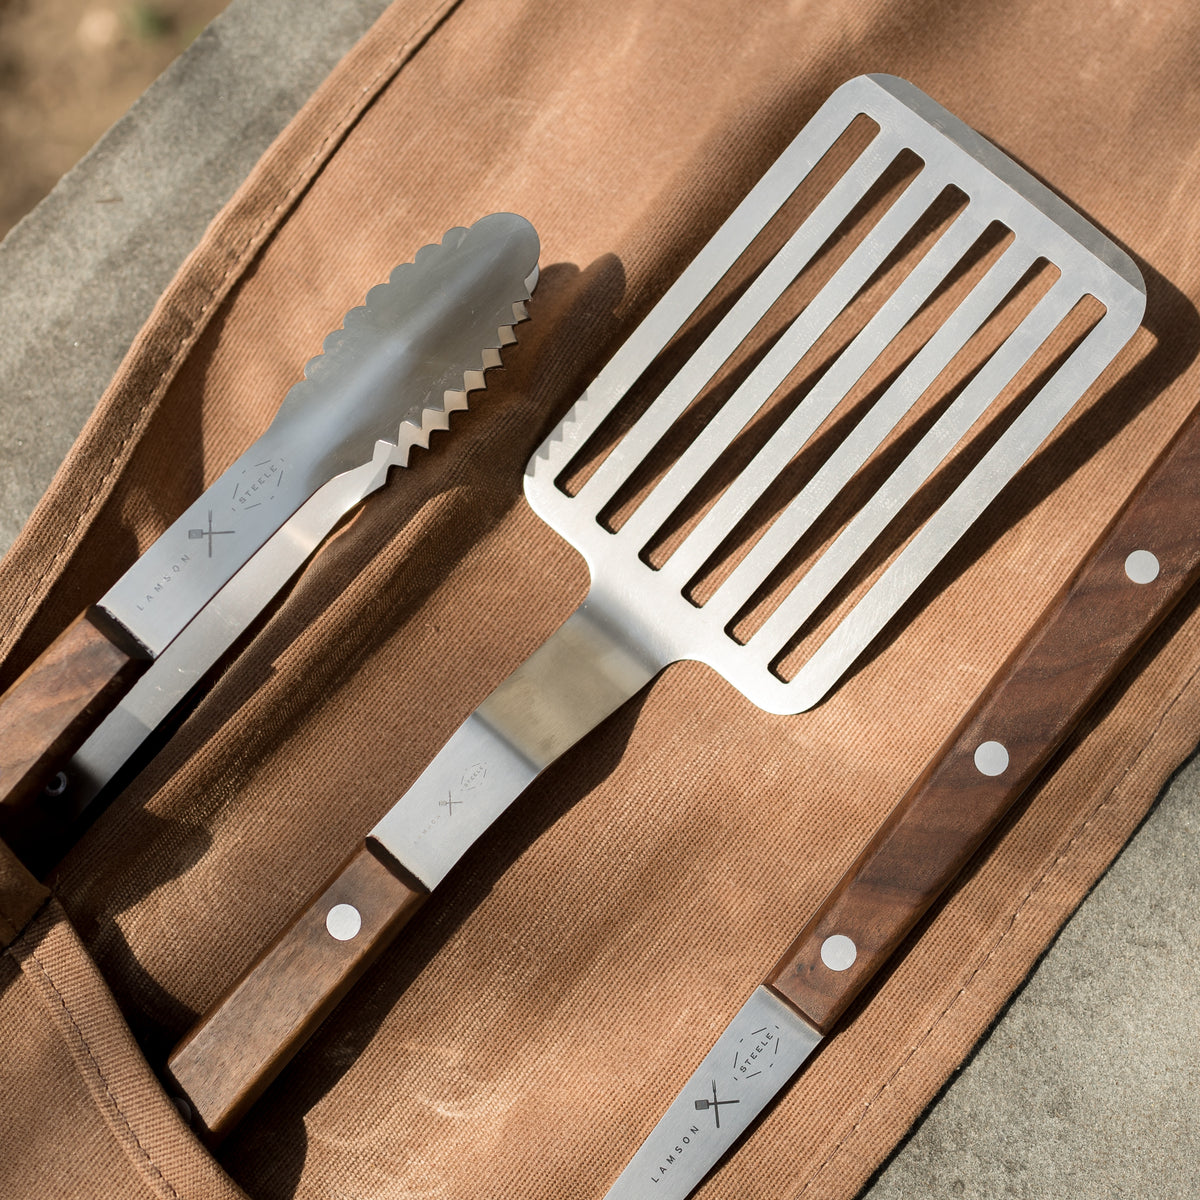 Personalised BBQ Grill Tool Set. Custom Engraved Wood Handle